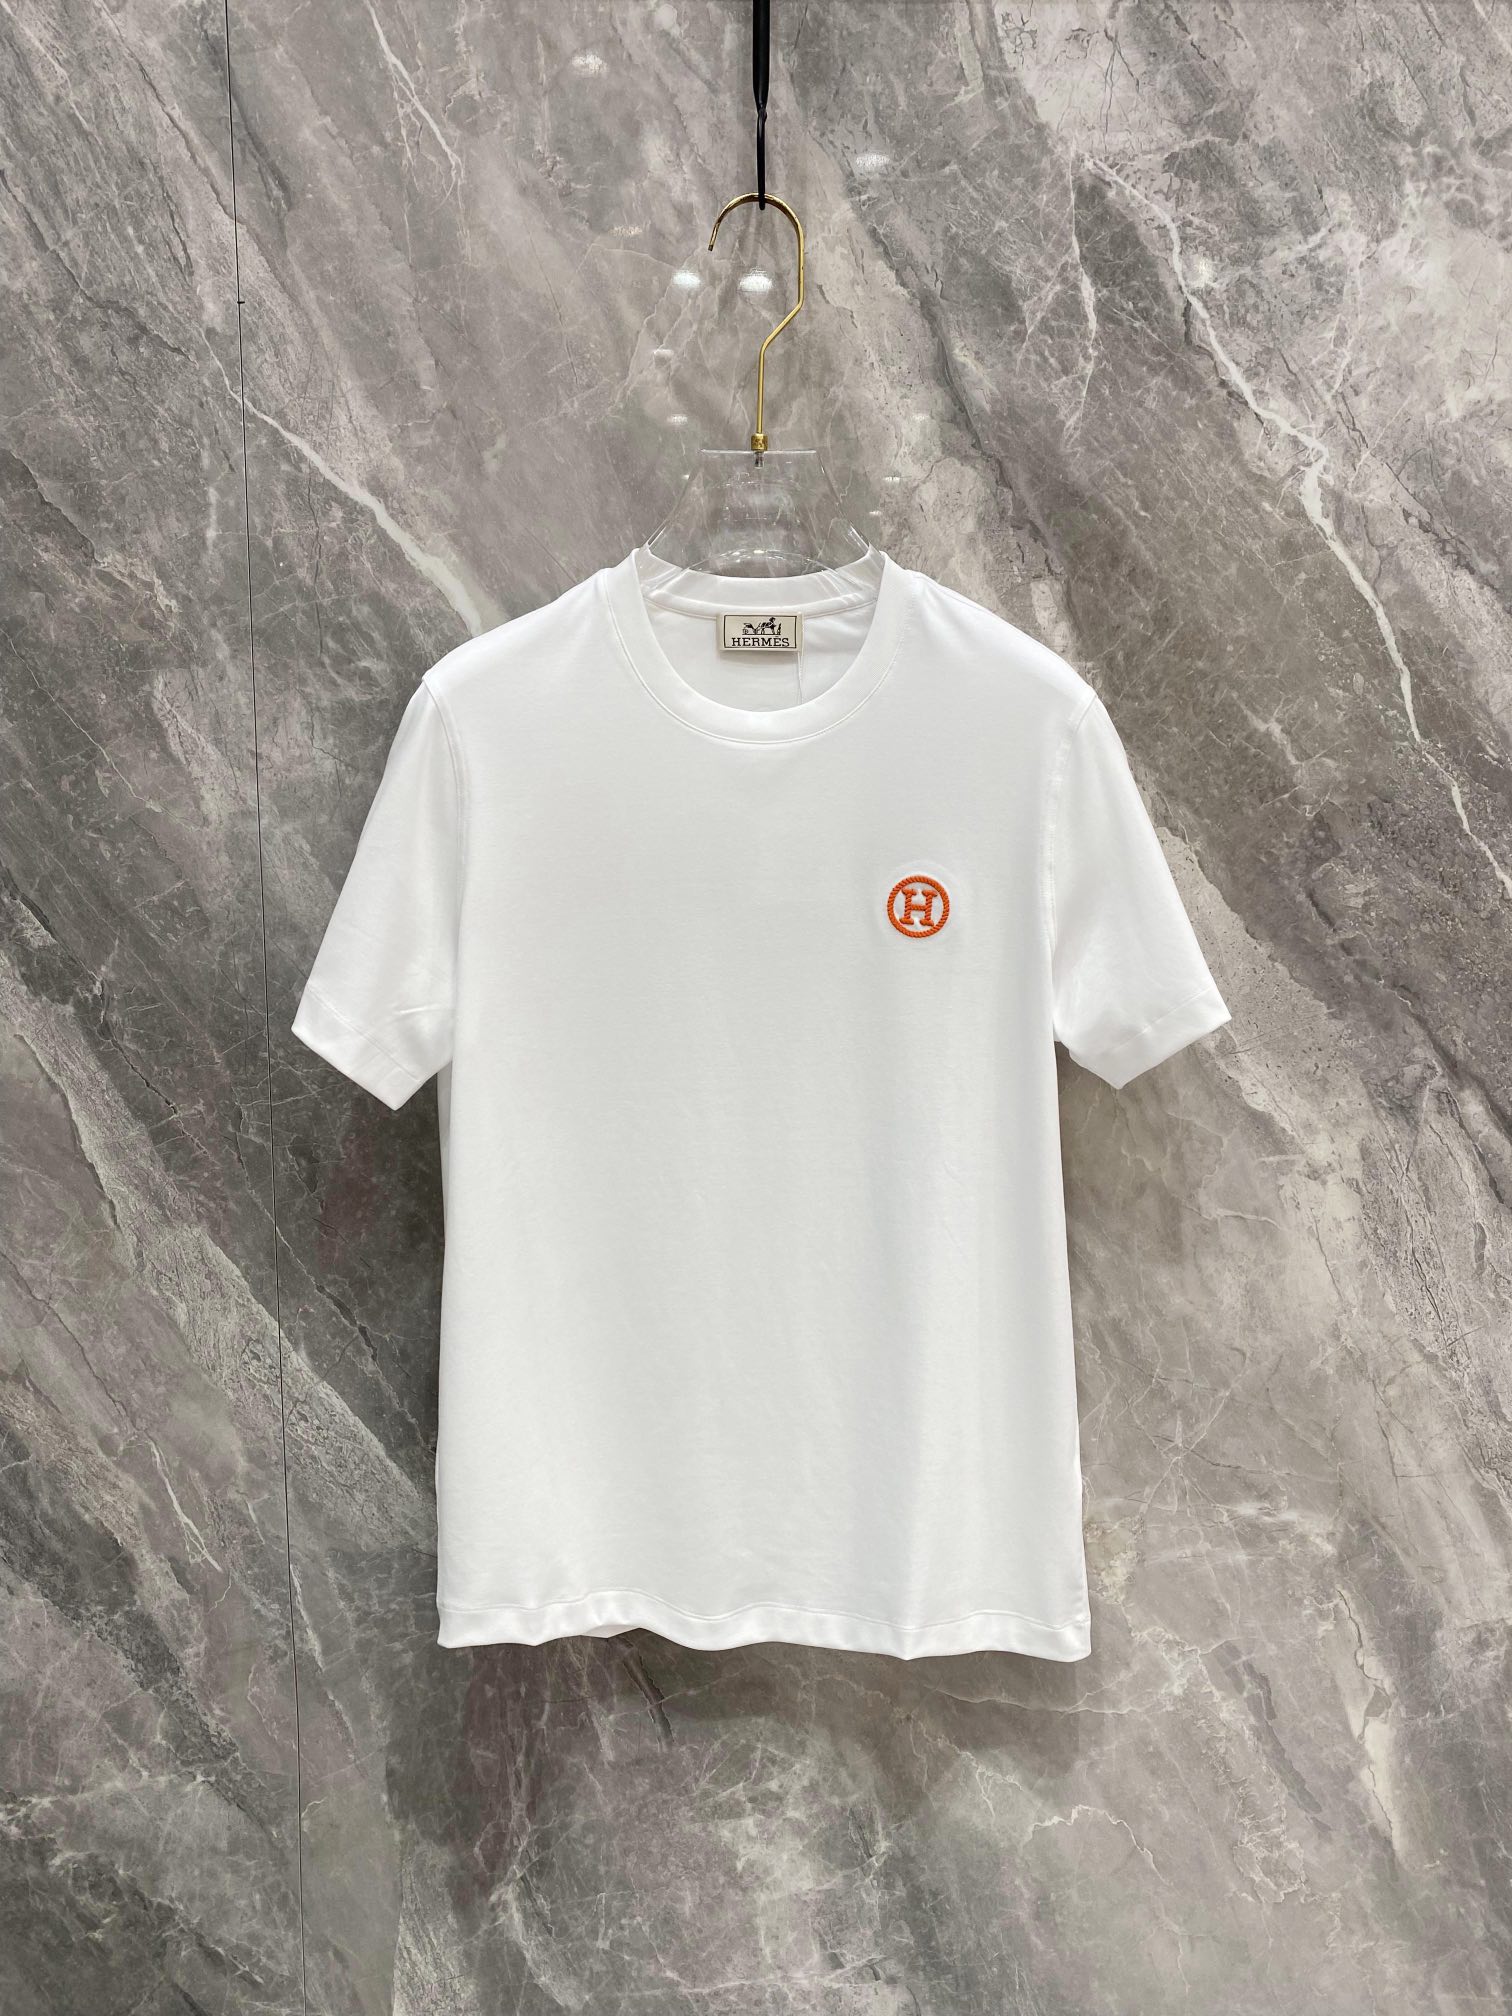 Hermes Clothing T-Shirt Unisex Cotton Short Sleeve